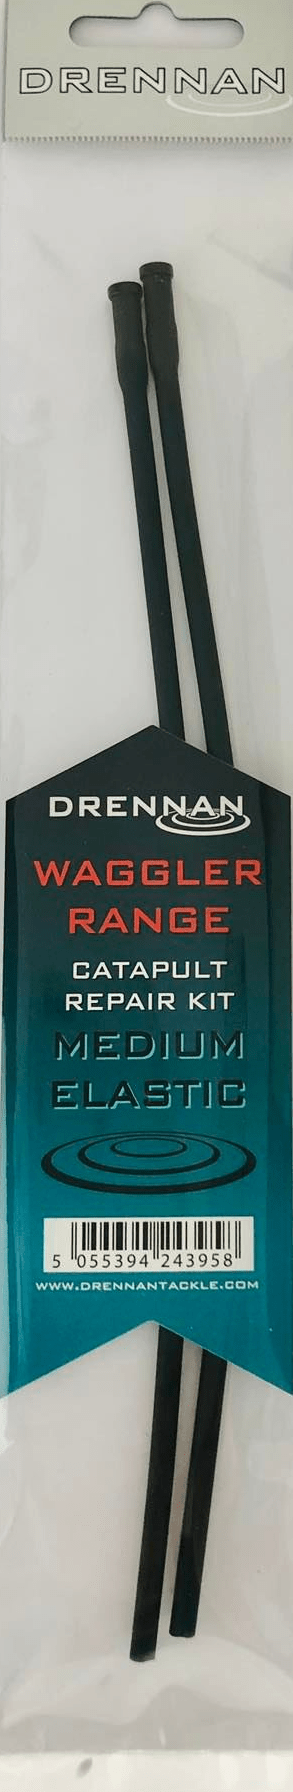 drennan waggler range catapult katapult repair kit medium elastic